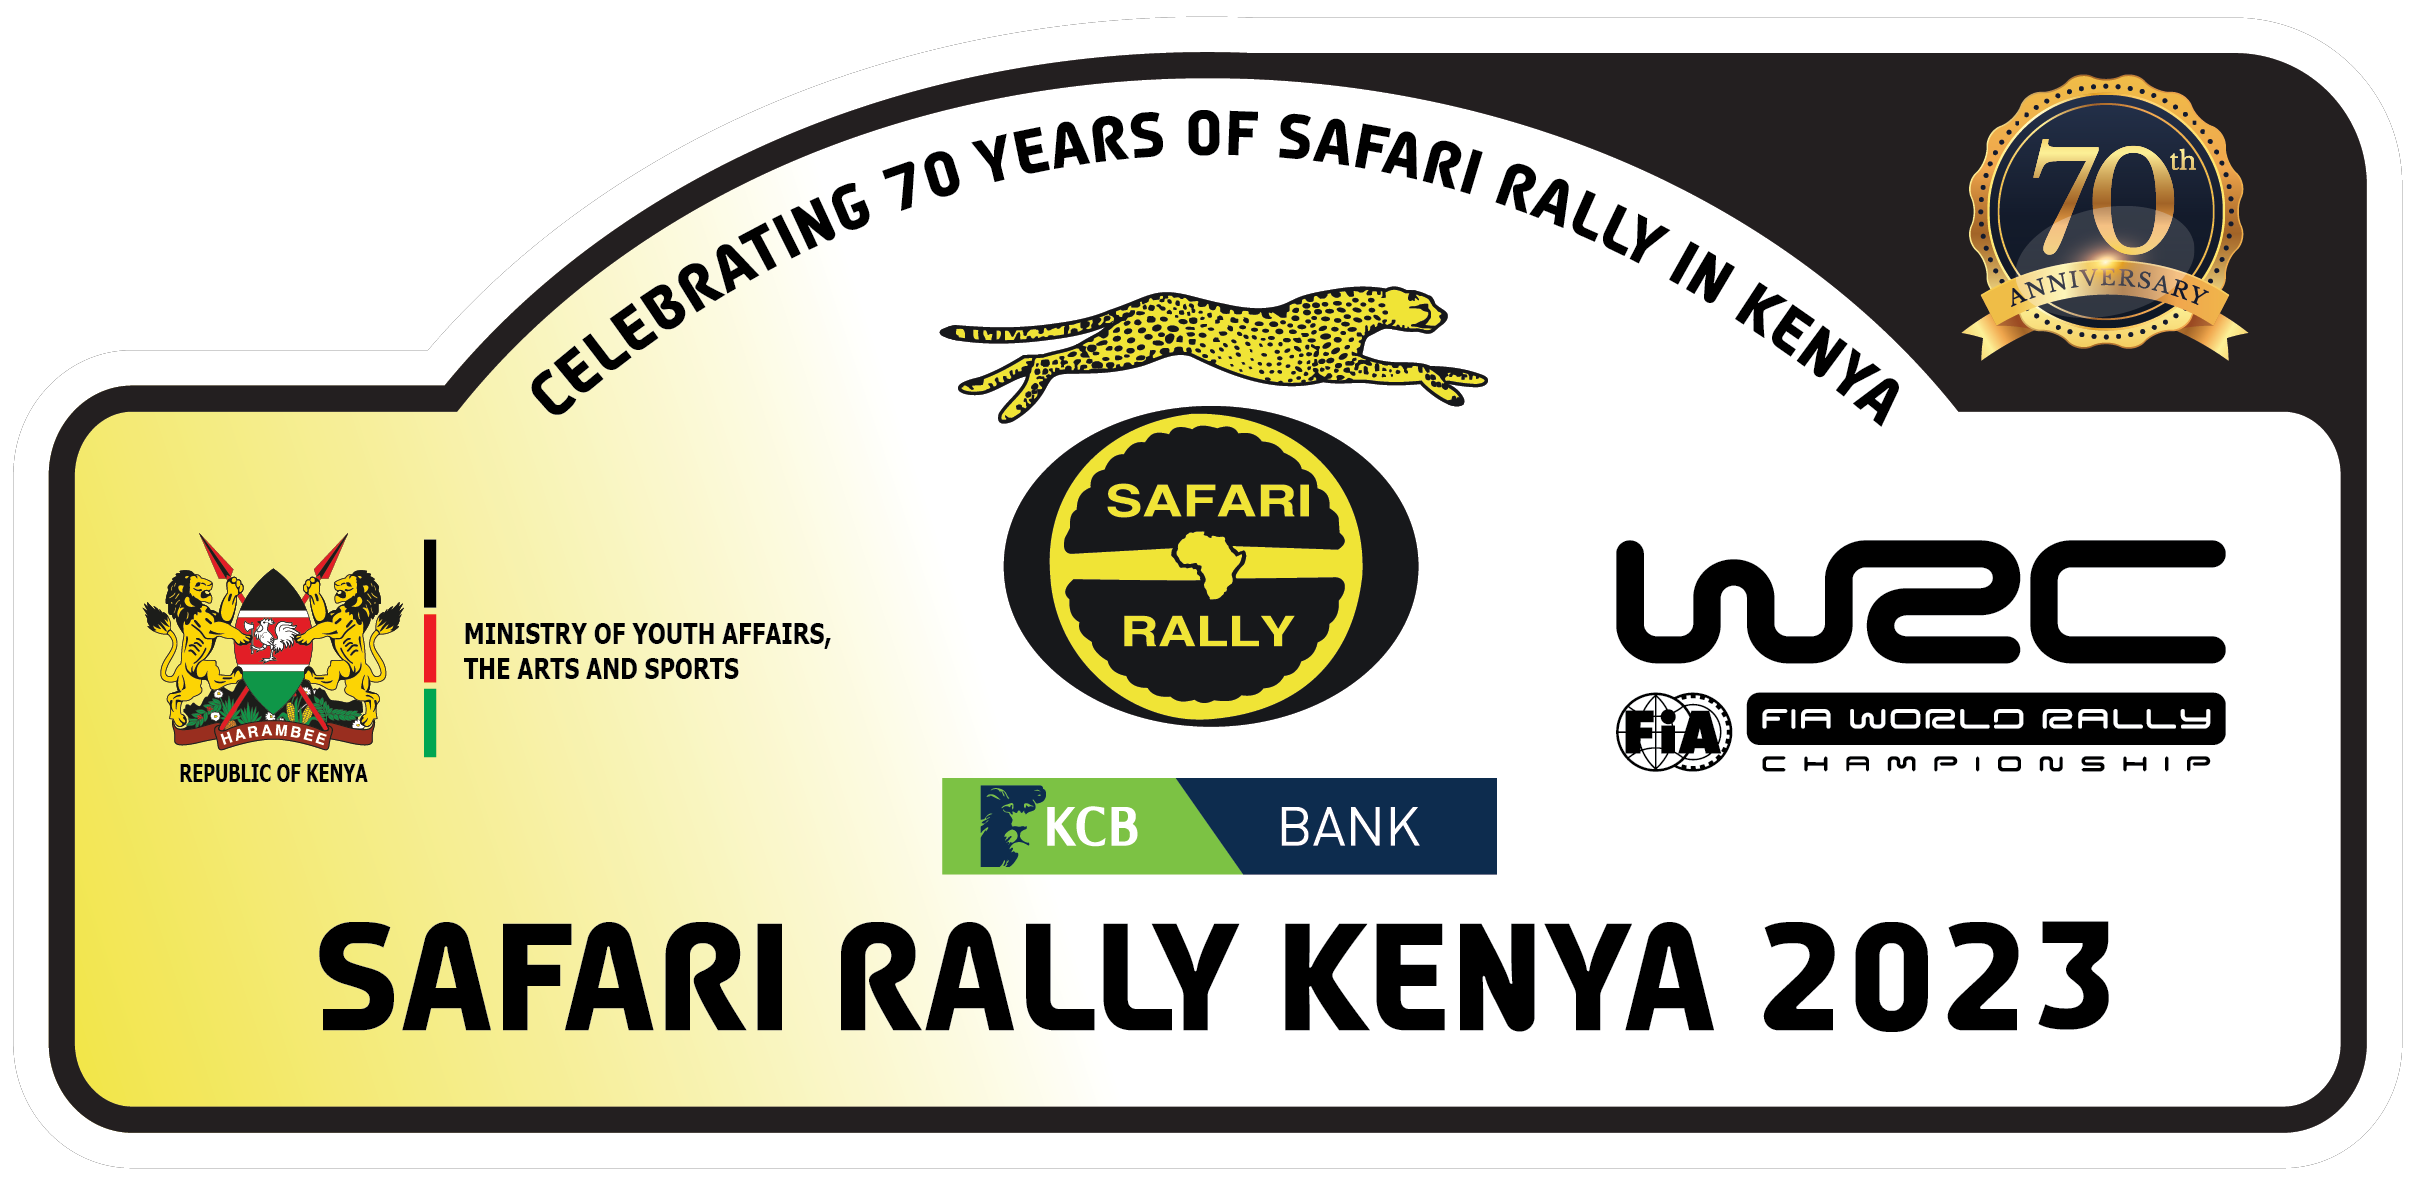 Safari Rally Kenya 2023